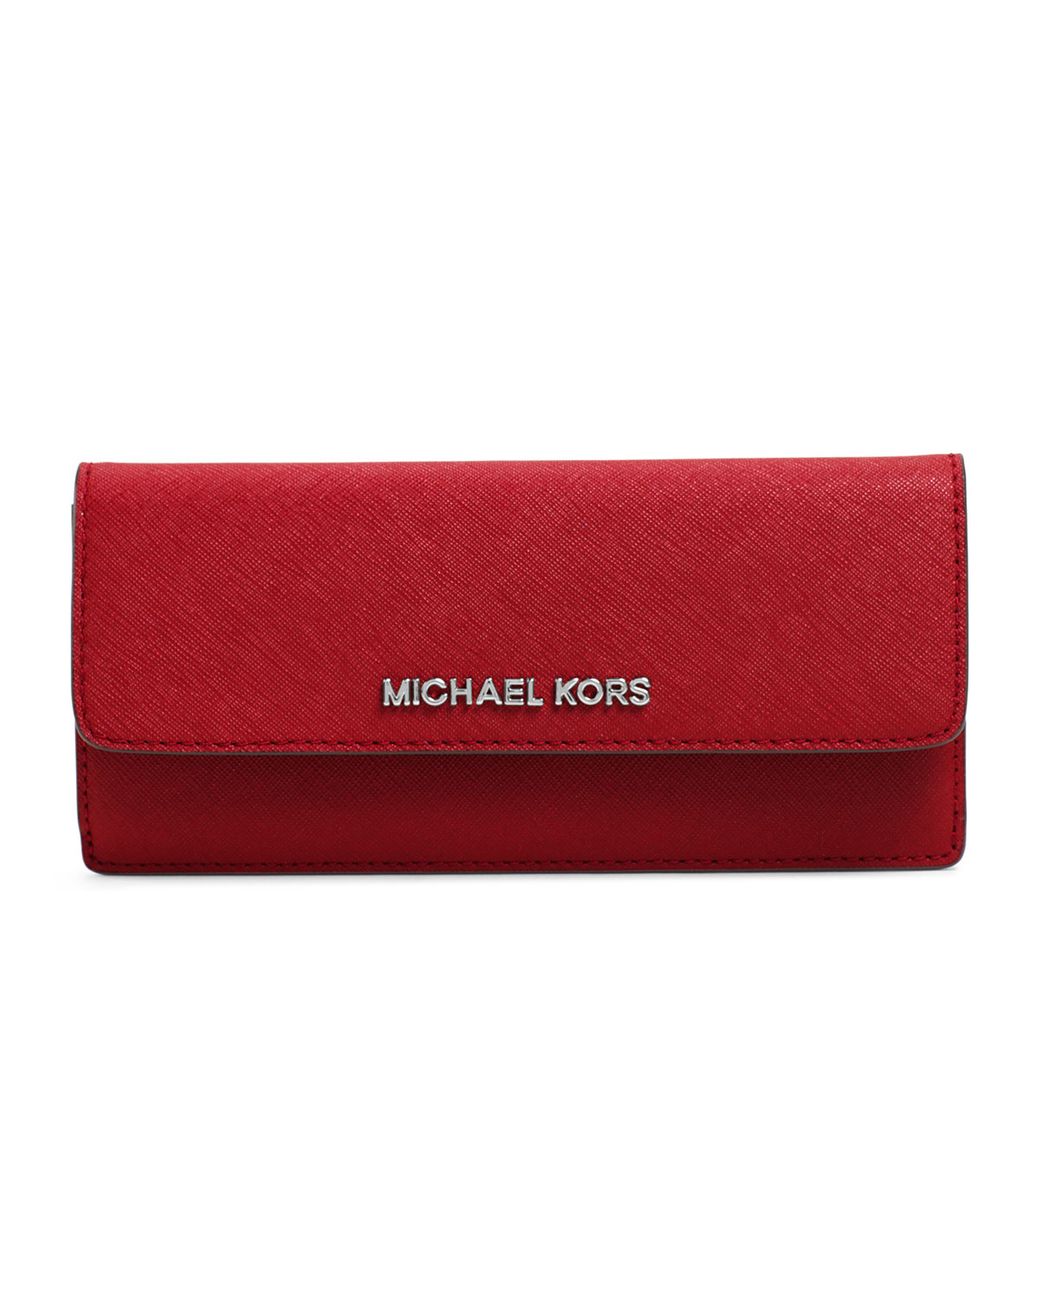 Michael Kors Logo Jet Set Charm Small Slim Card Case  Macys